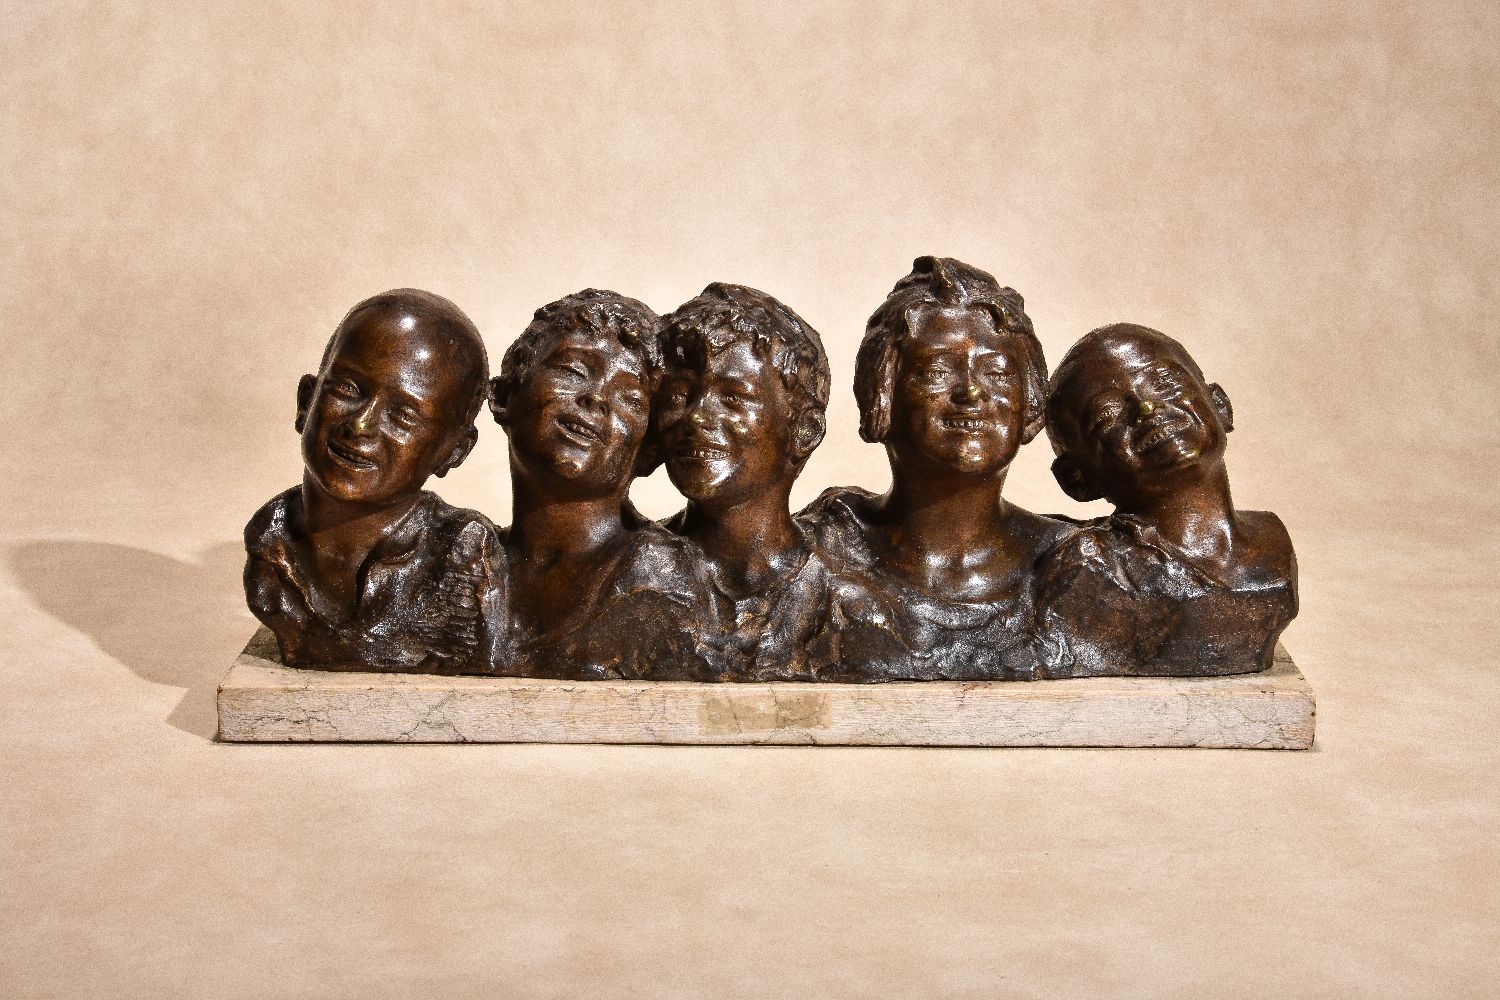 Vincenzo Aurisicchio, (Italian, 1855 - 1926), five adjoined busts of Neapolitan street urchins,